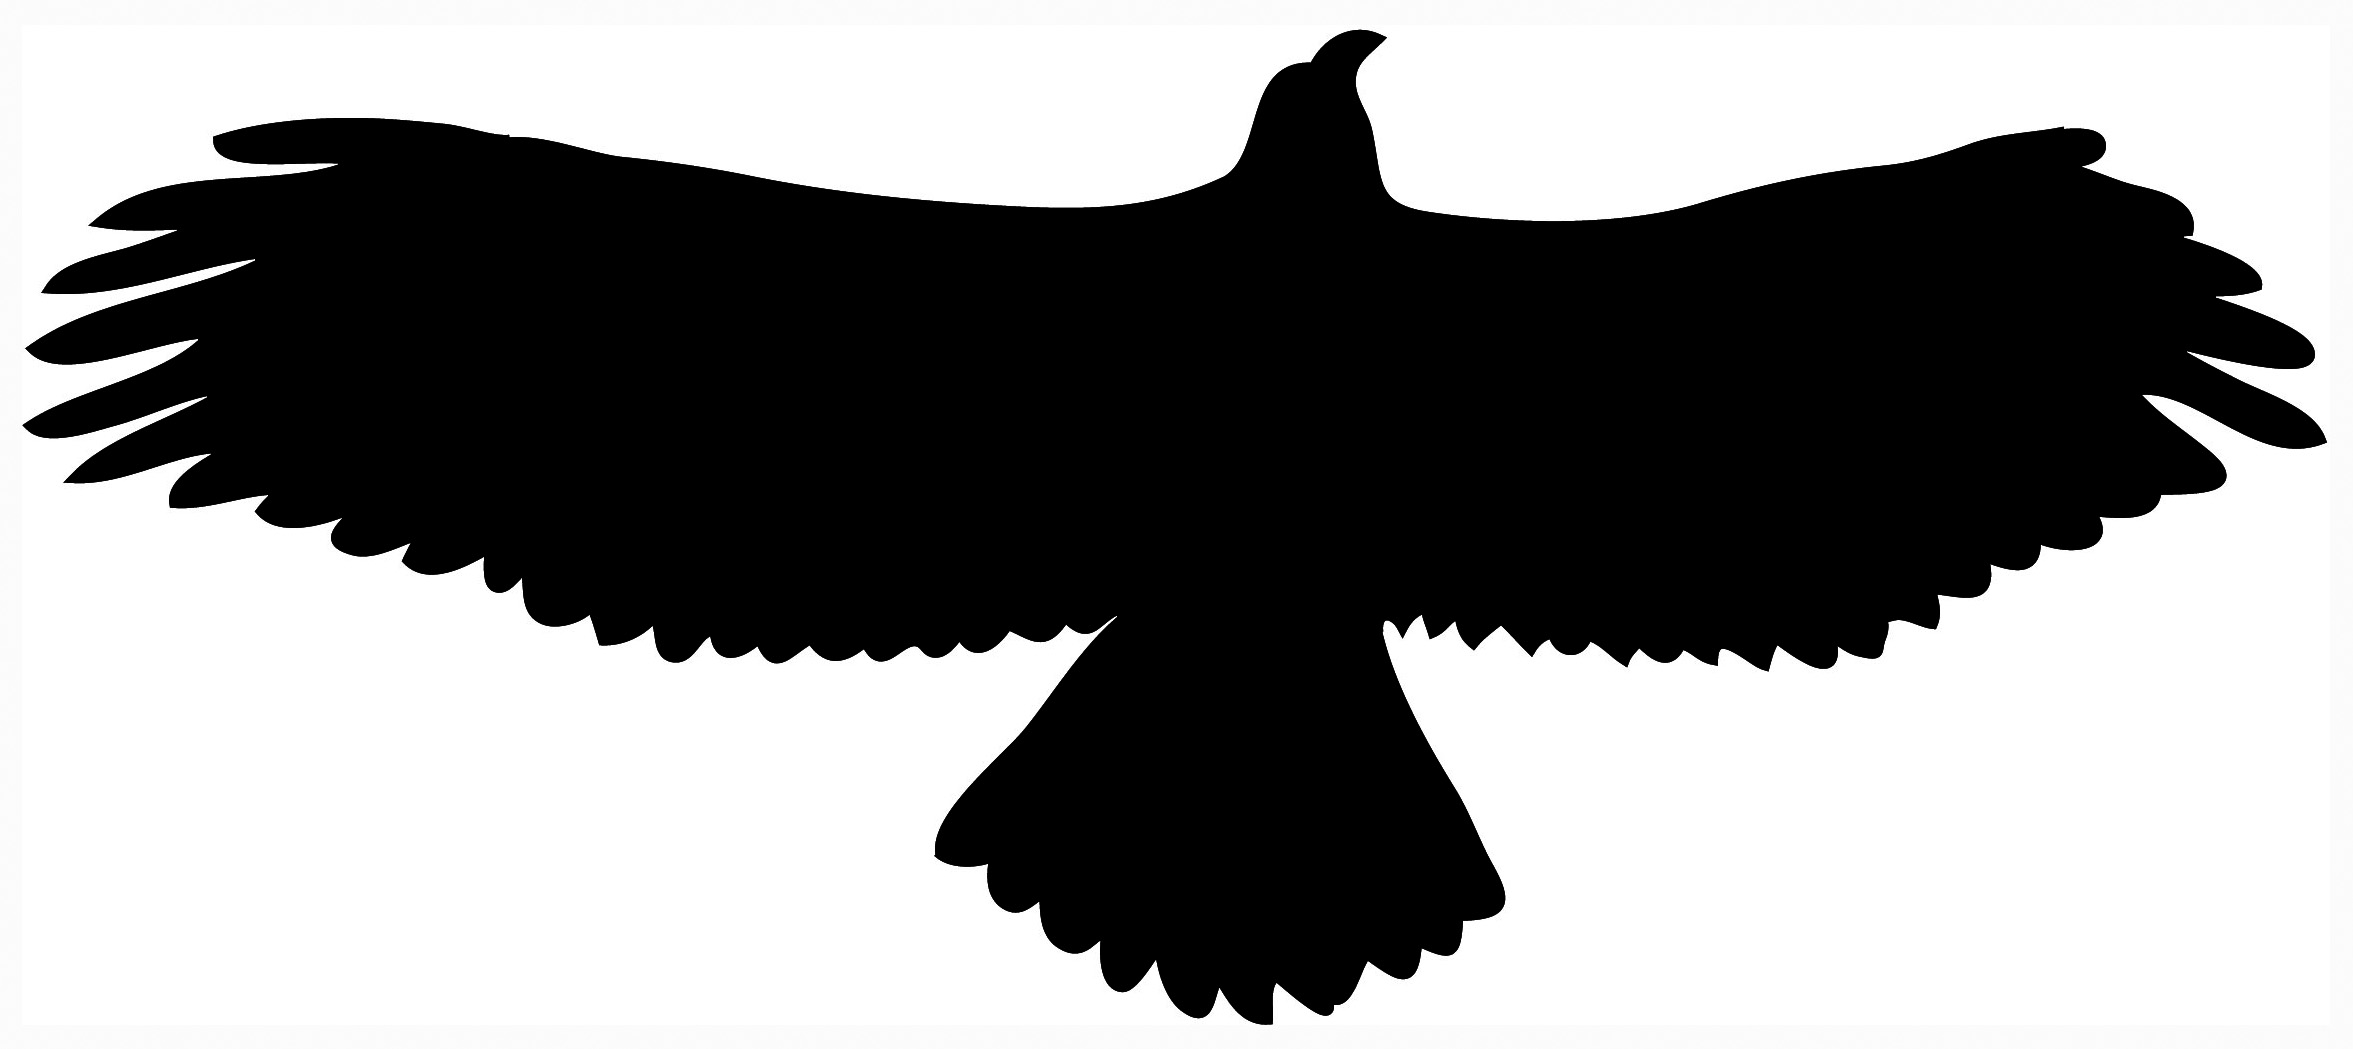 Eagles silhouette clipart